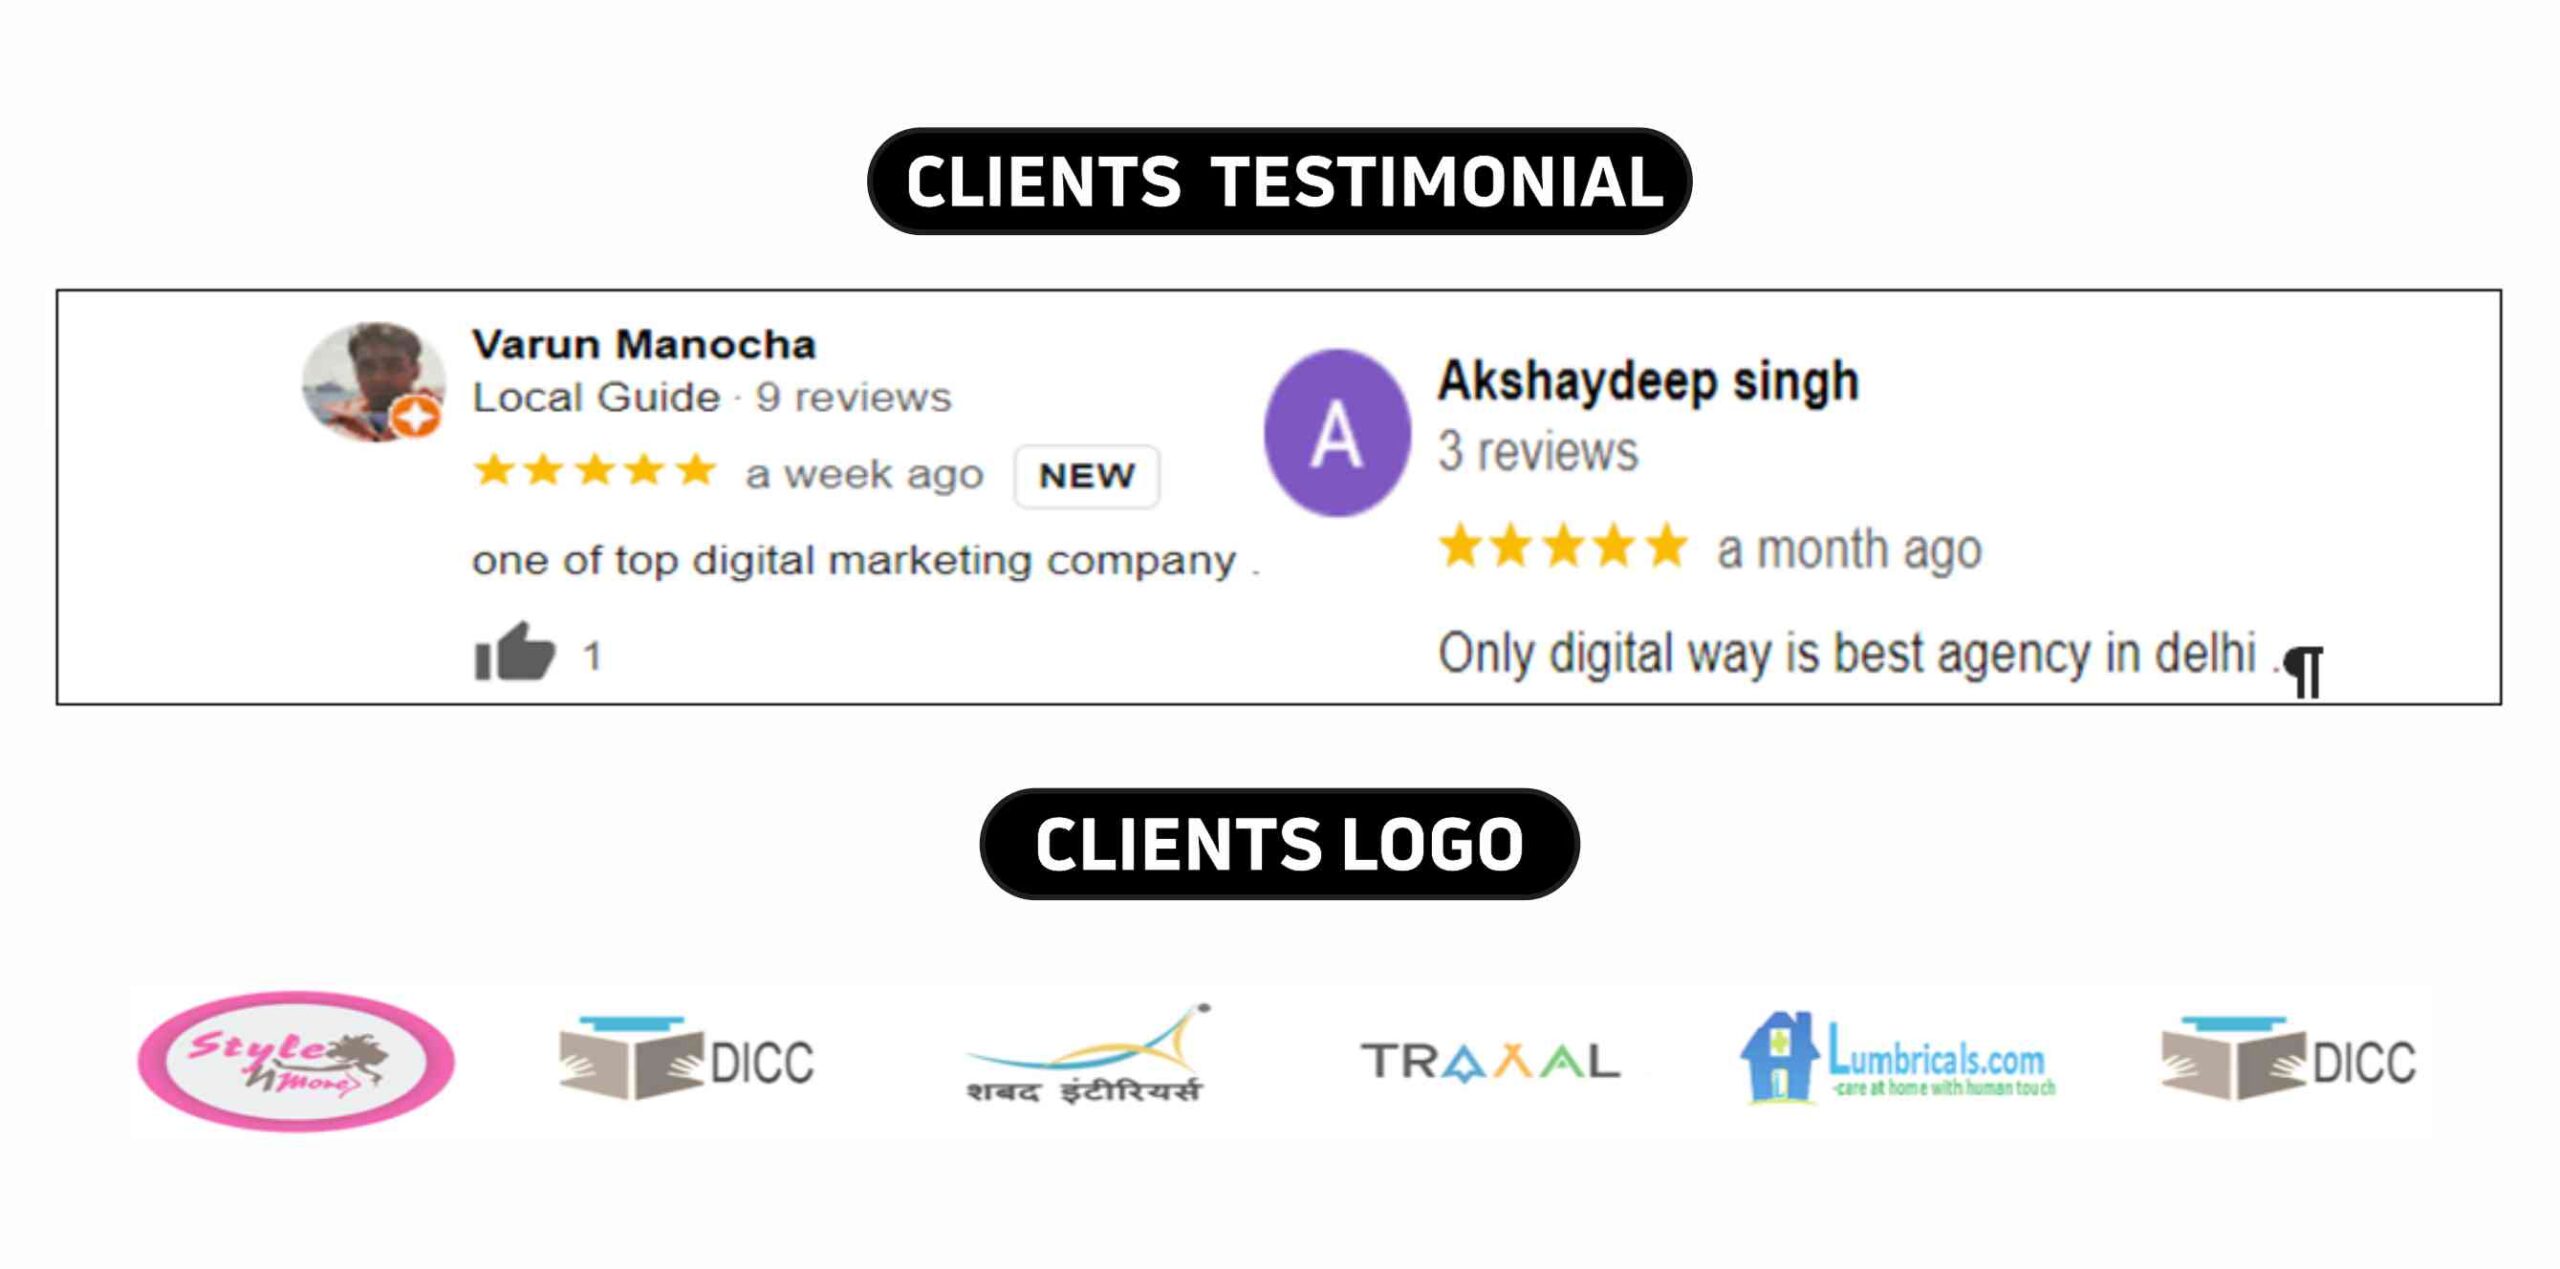 Onlydigitalway Client testimonial & Logos 